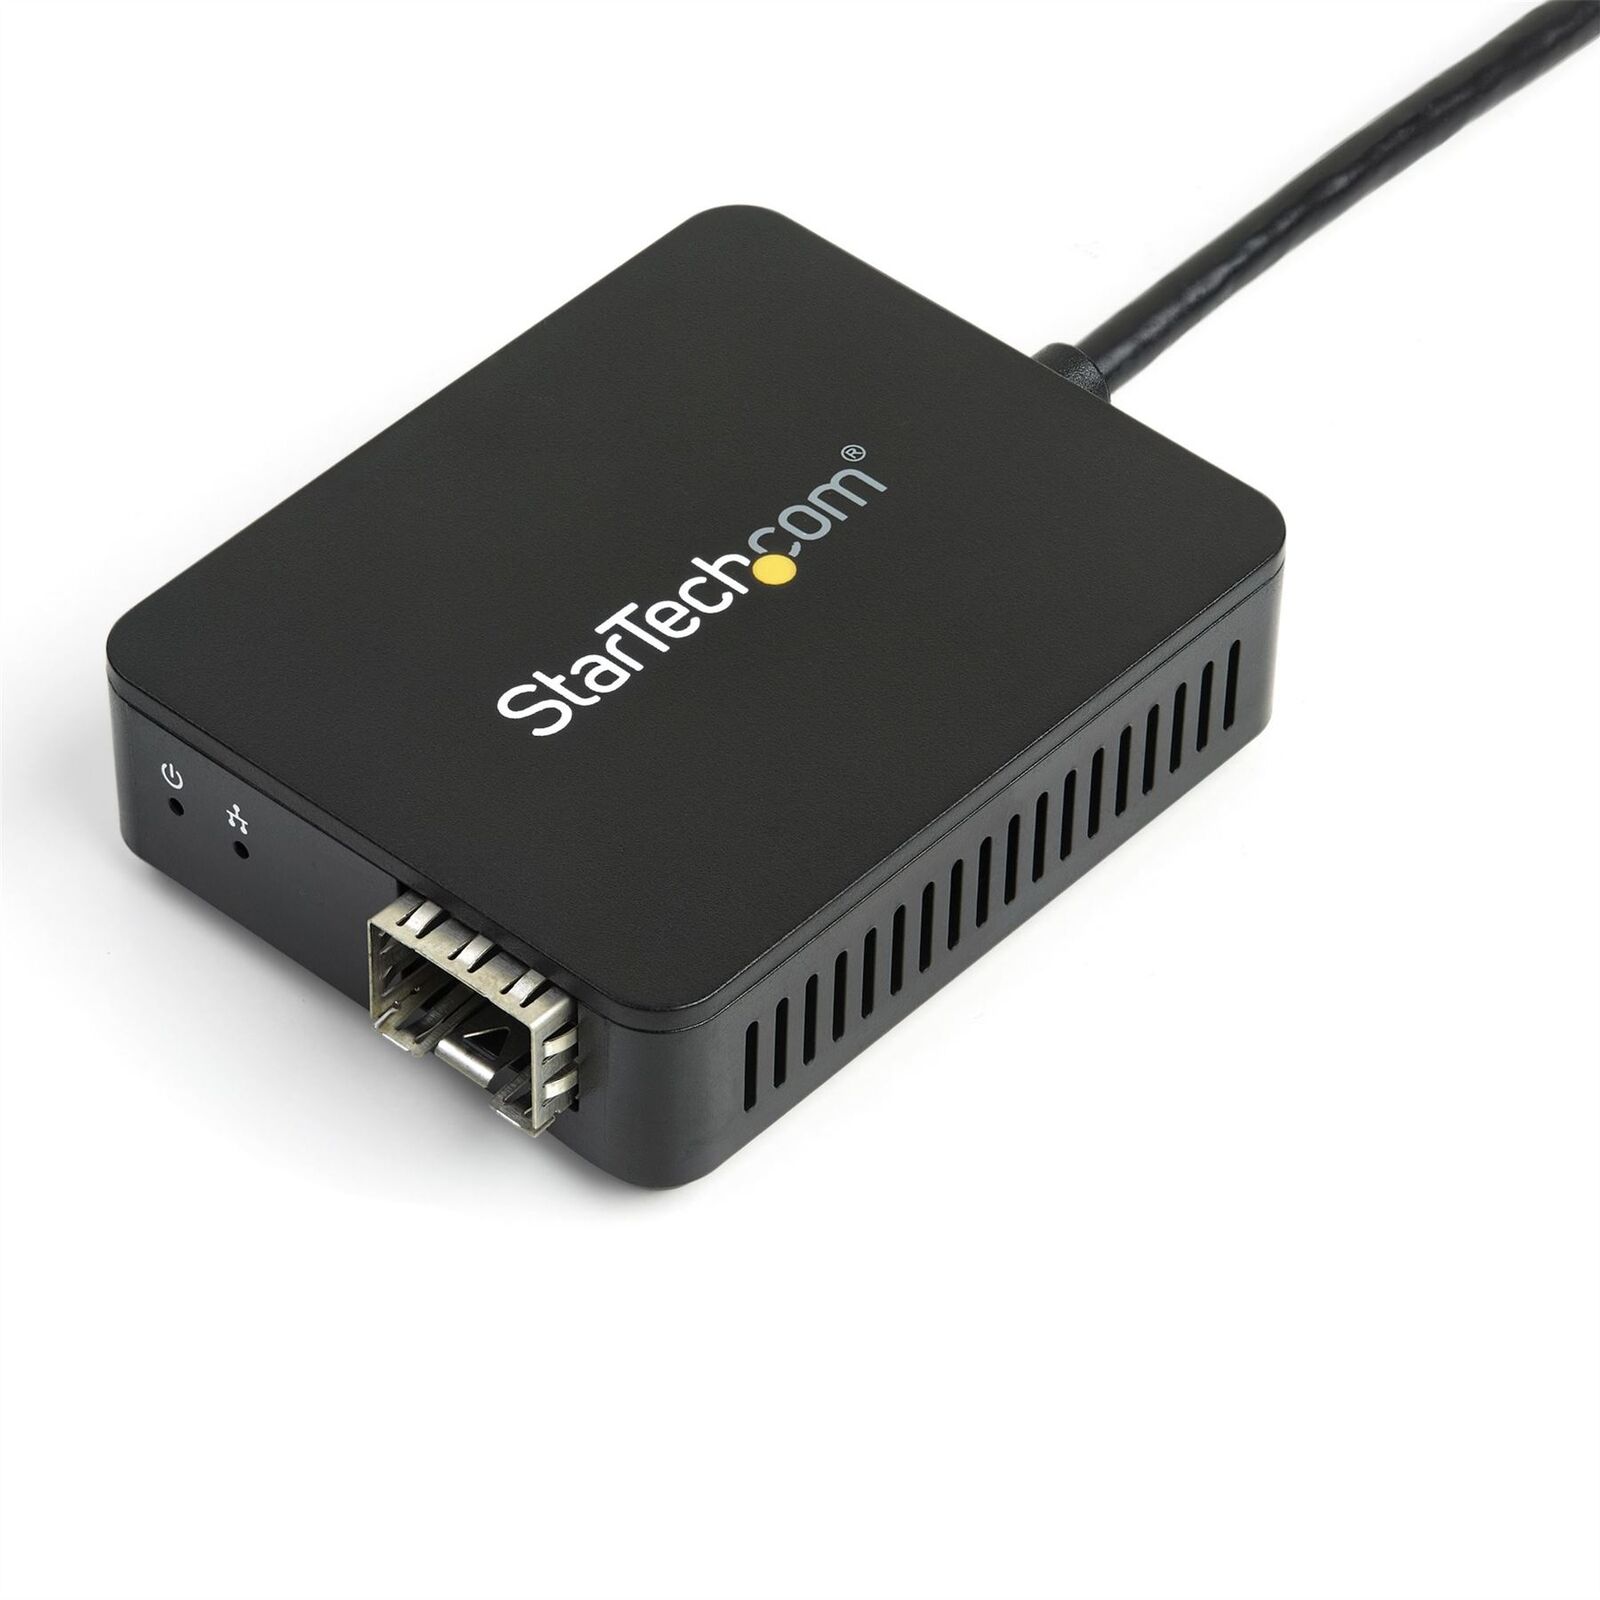 StarTech.com USB 3.0 to Fiber Optic Converter - Compact USB to Open SFP Adapter